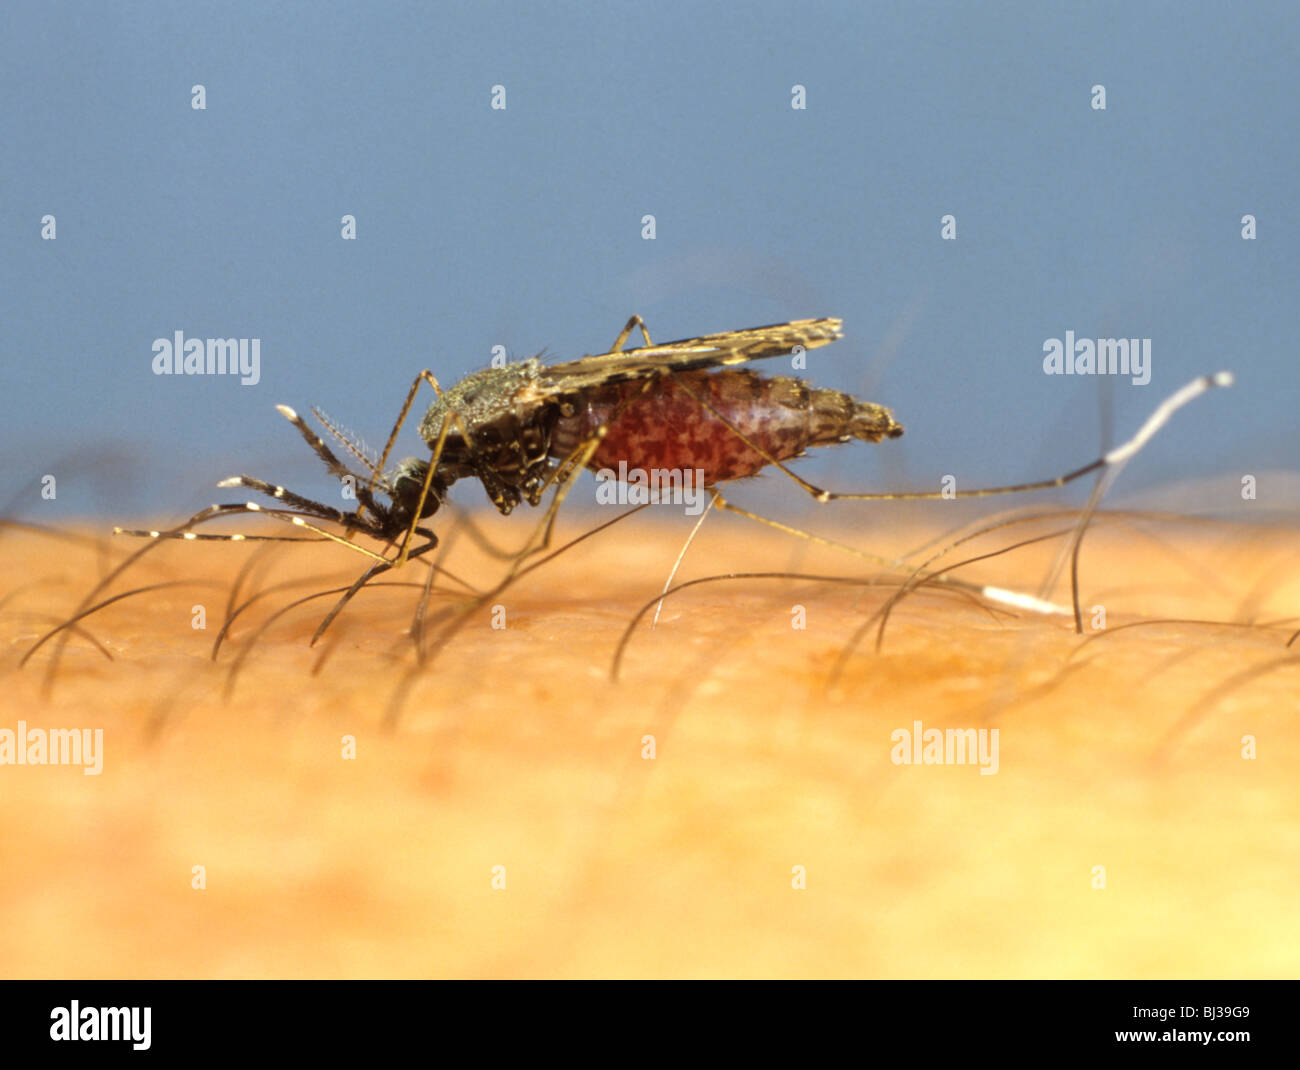 South American malaria vector mosquito (Anopheles albimanus) feeding on human arm Stock Photo